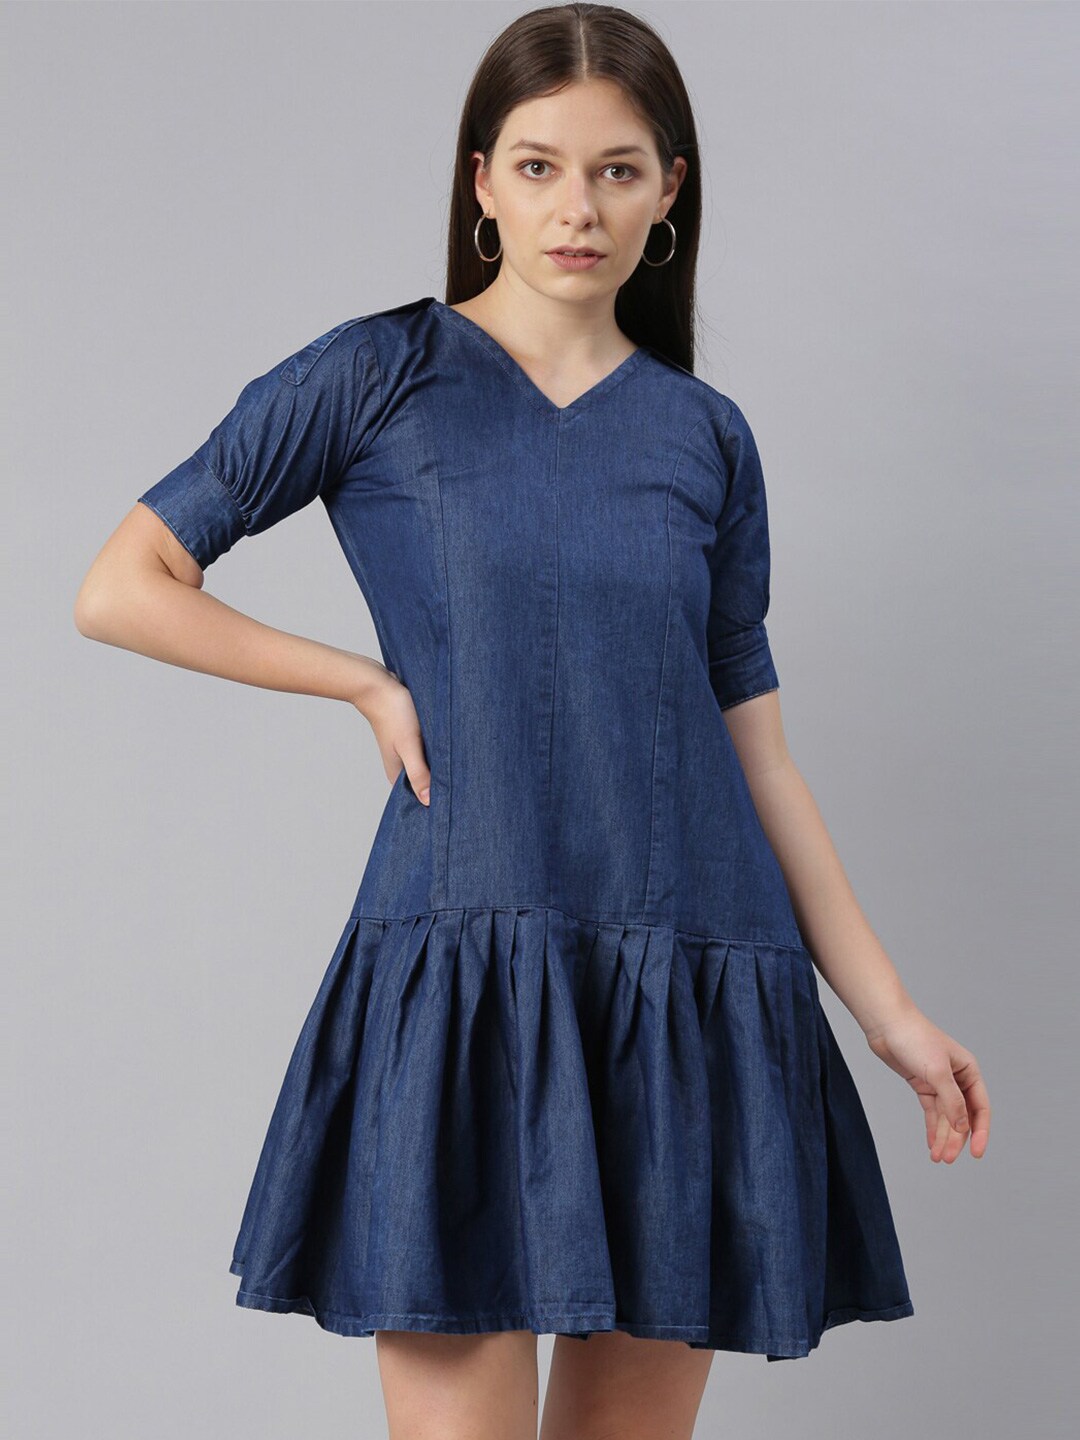 ZHEIA Blue A-Line Dress Price in India